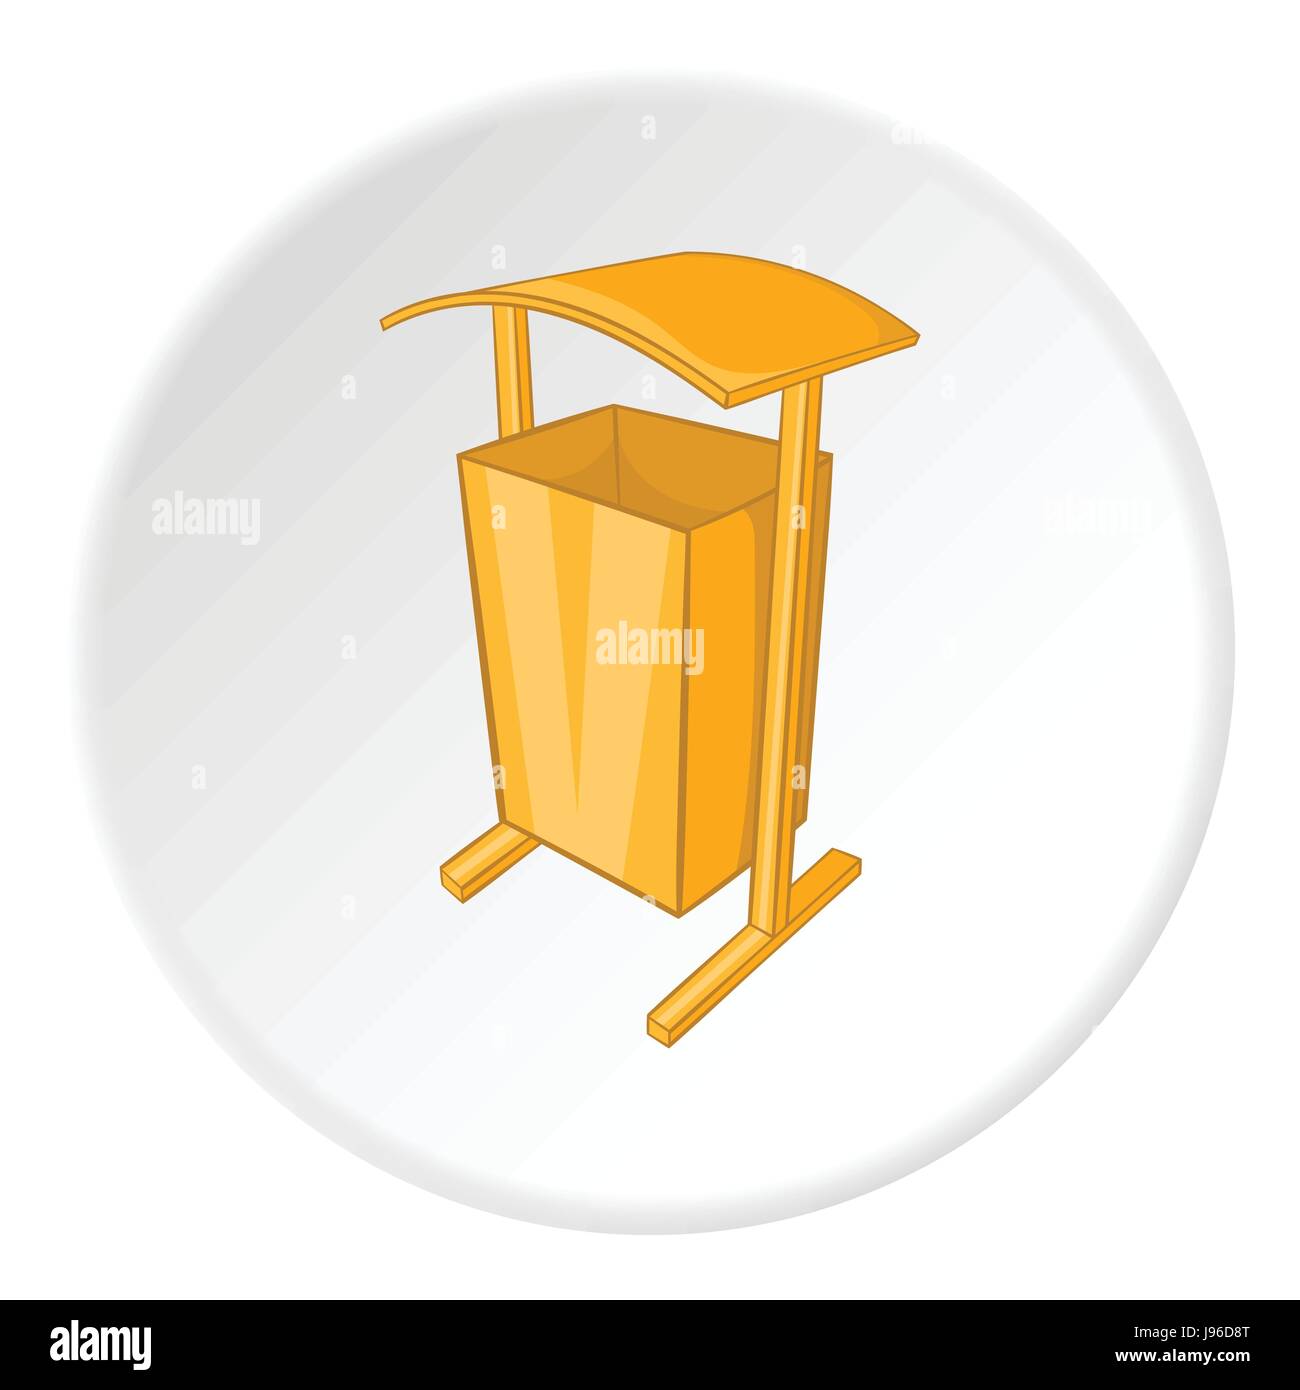 Dustbin for public spaces icon, cartoon style Stock Vector